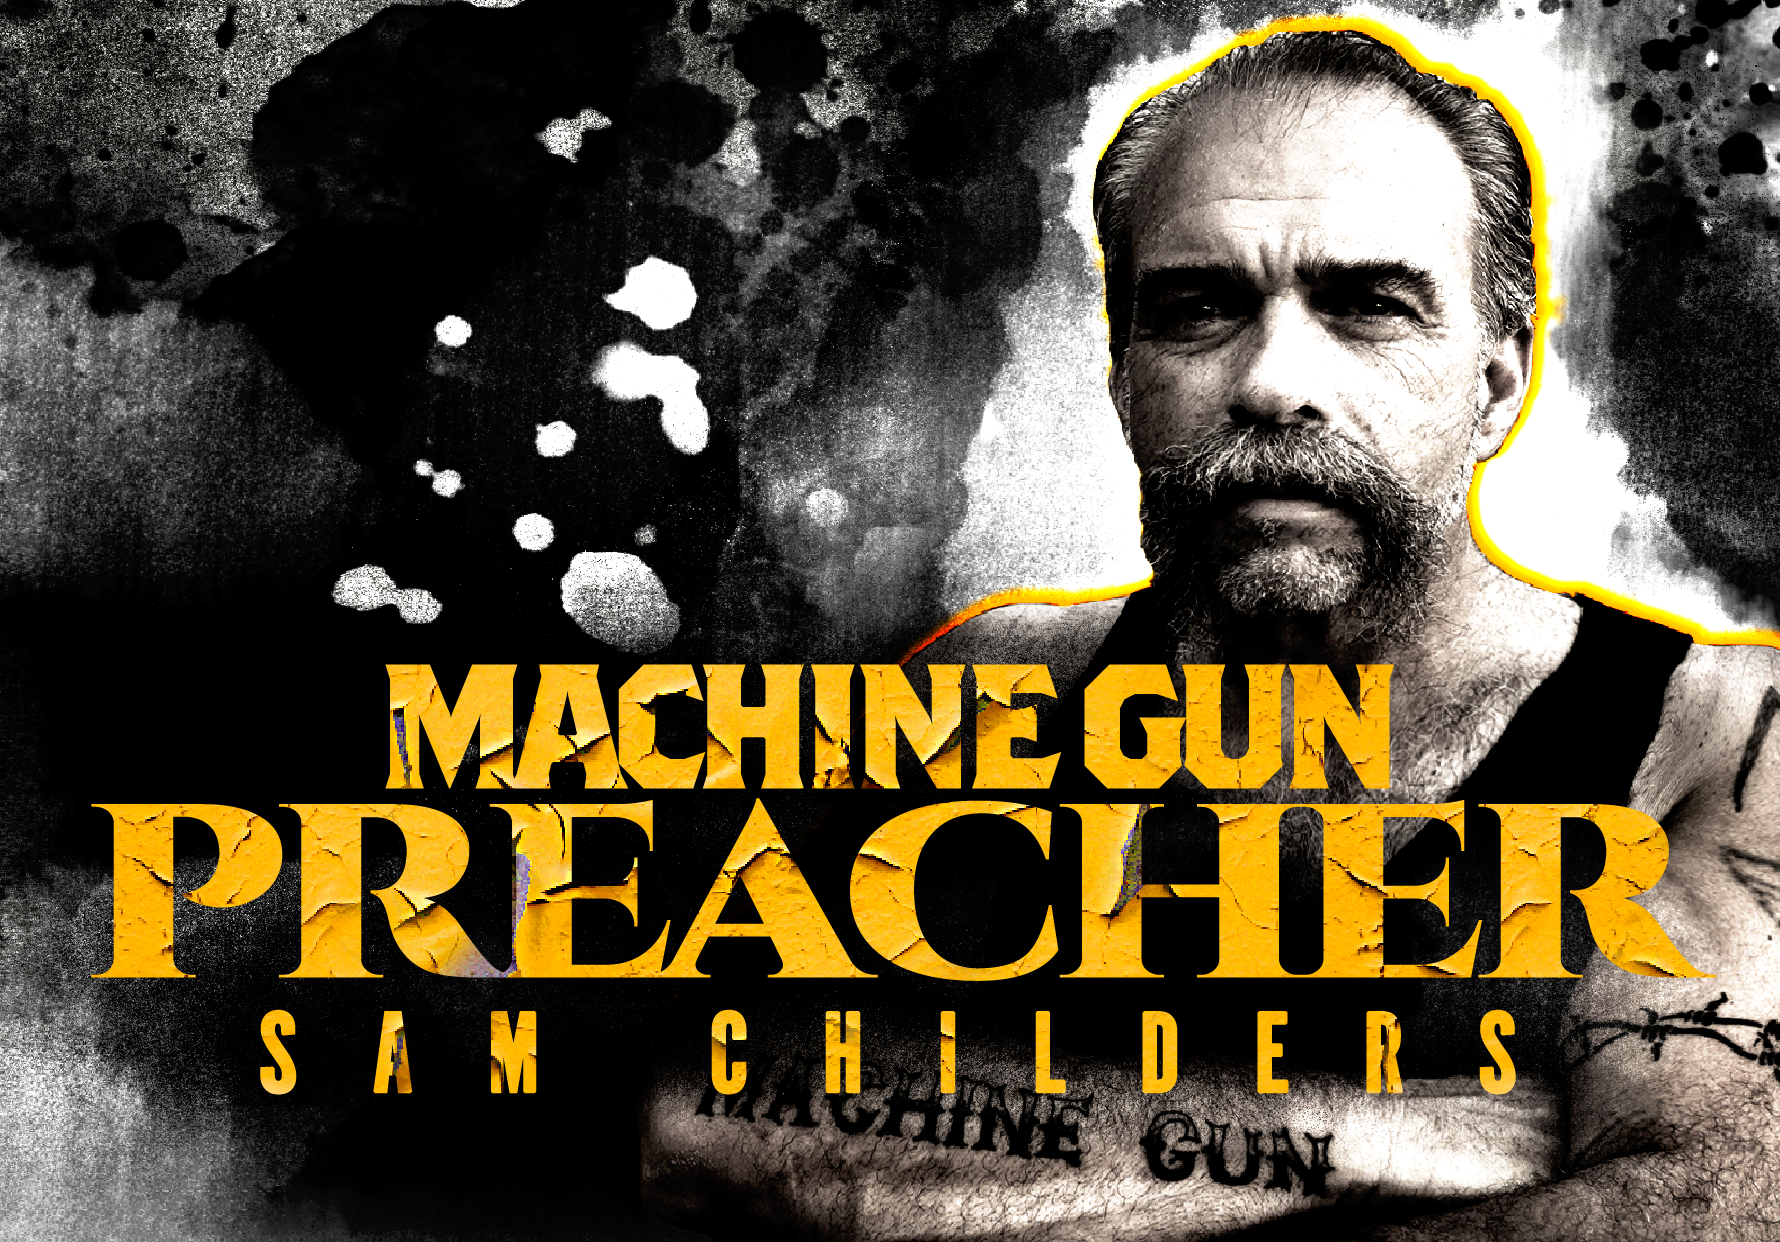 The Real Machine Gun Preacher Comes to Excel